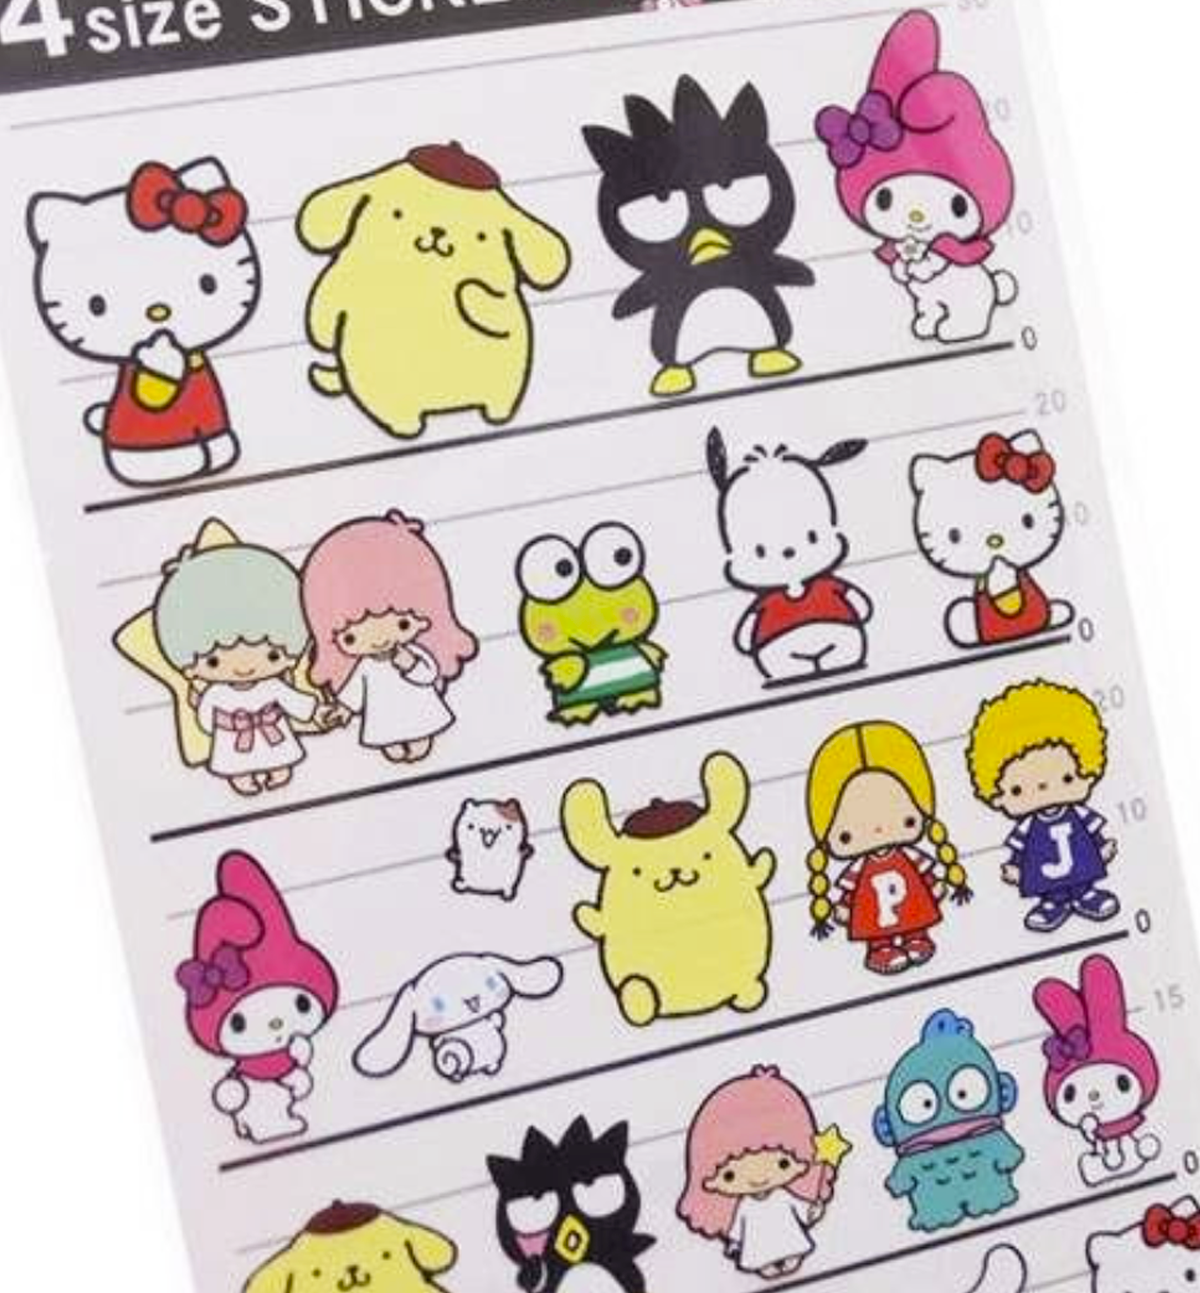 Sanrio 4 Size Sticker [Sanrio Family]